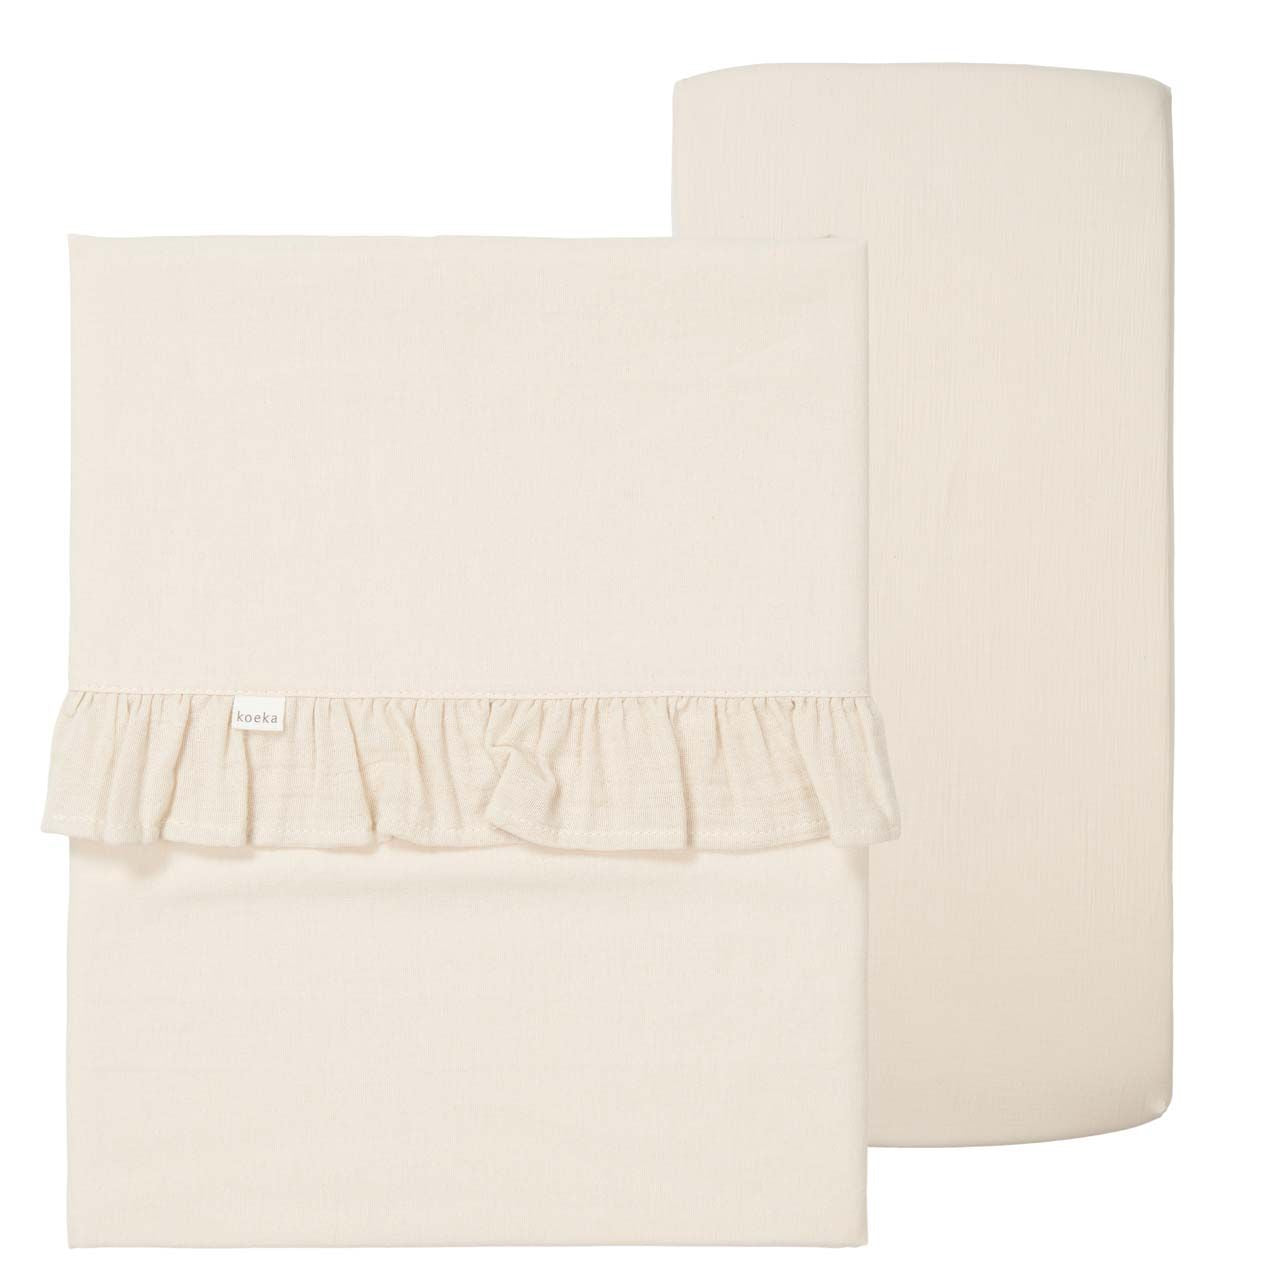 Koeka Flat Sheet And Fitted Sheet Set - Ruffle Faro Crib / Warm White - Hola BB